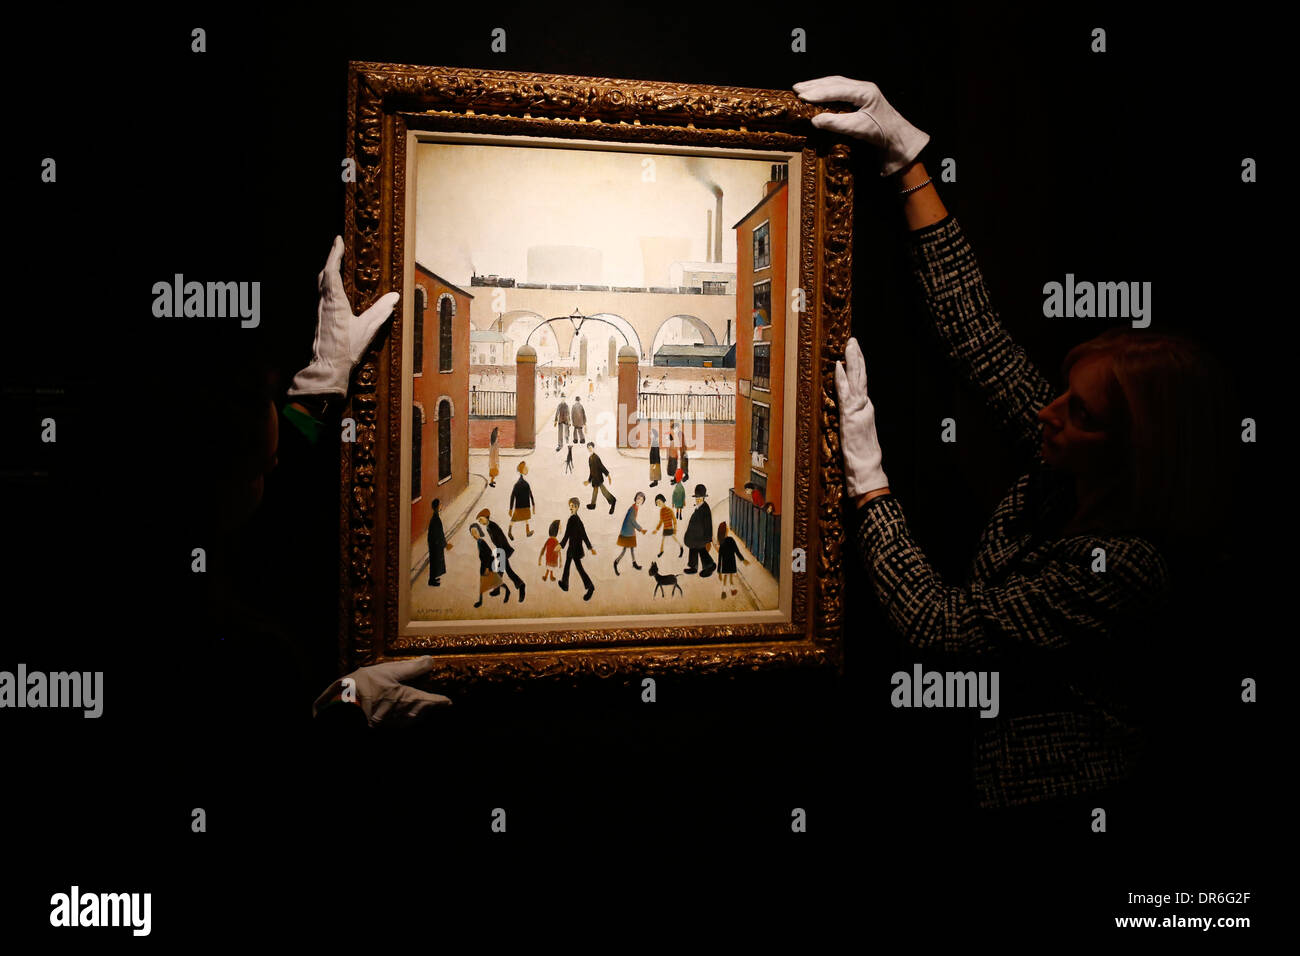 Christies 'Masterpieces' public exhibition,London, Stock Photo